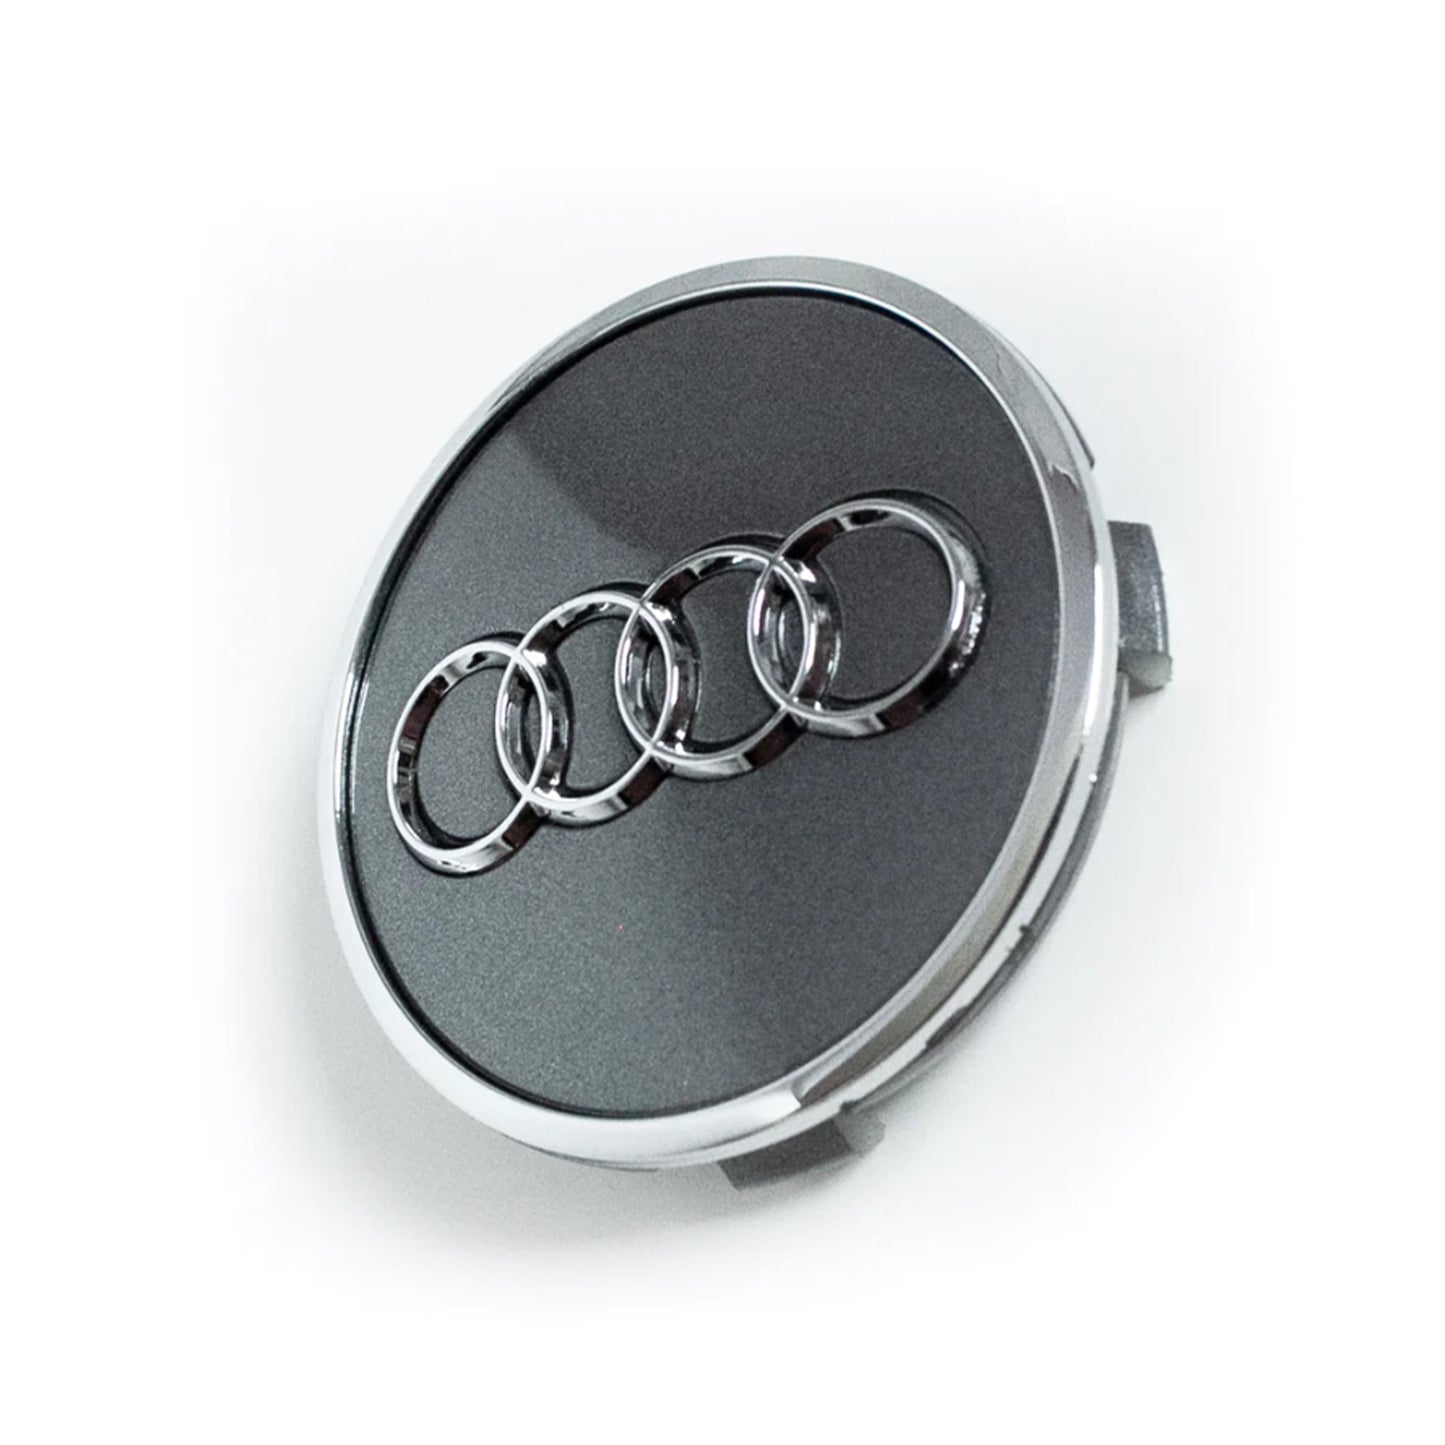 Audi Gray Rim Cover Hub Wheel Center Caps Emblem 69mm Set Of 4